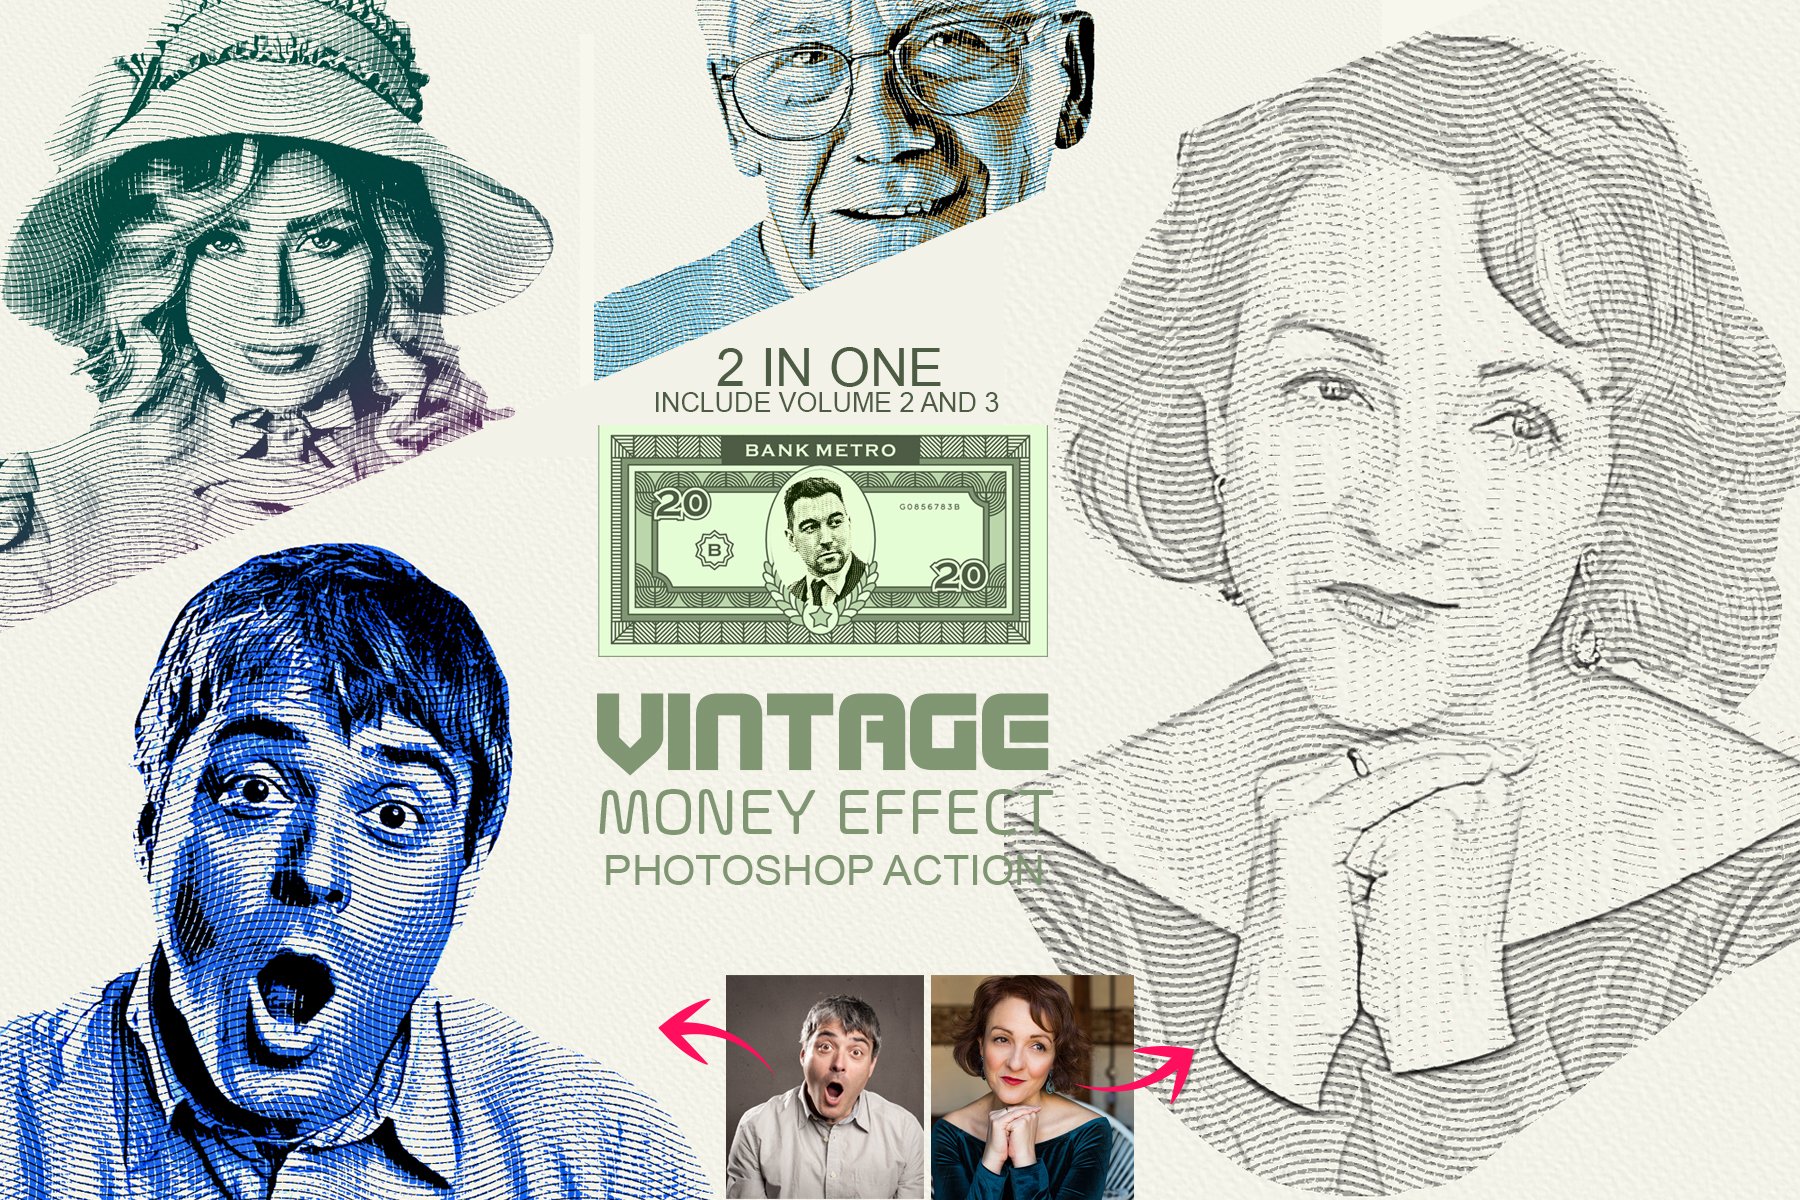 Vintage Money Effectcover image.